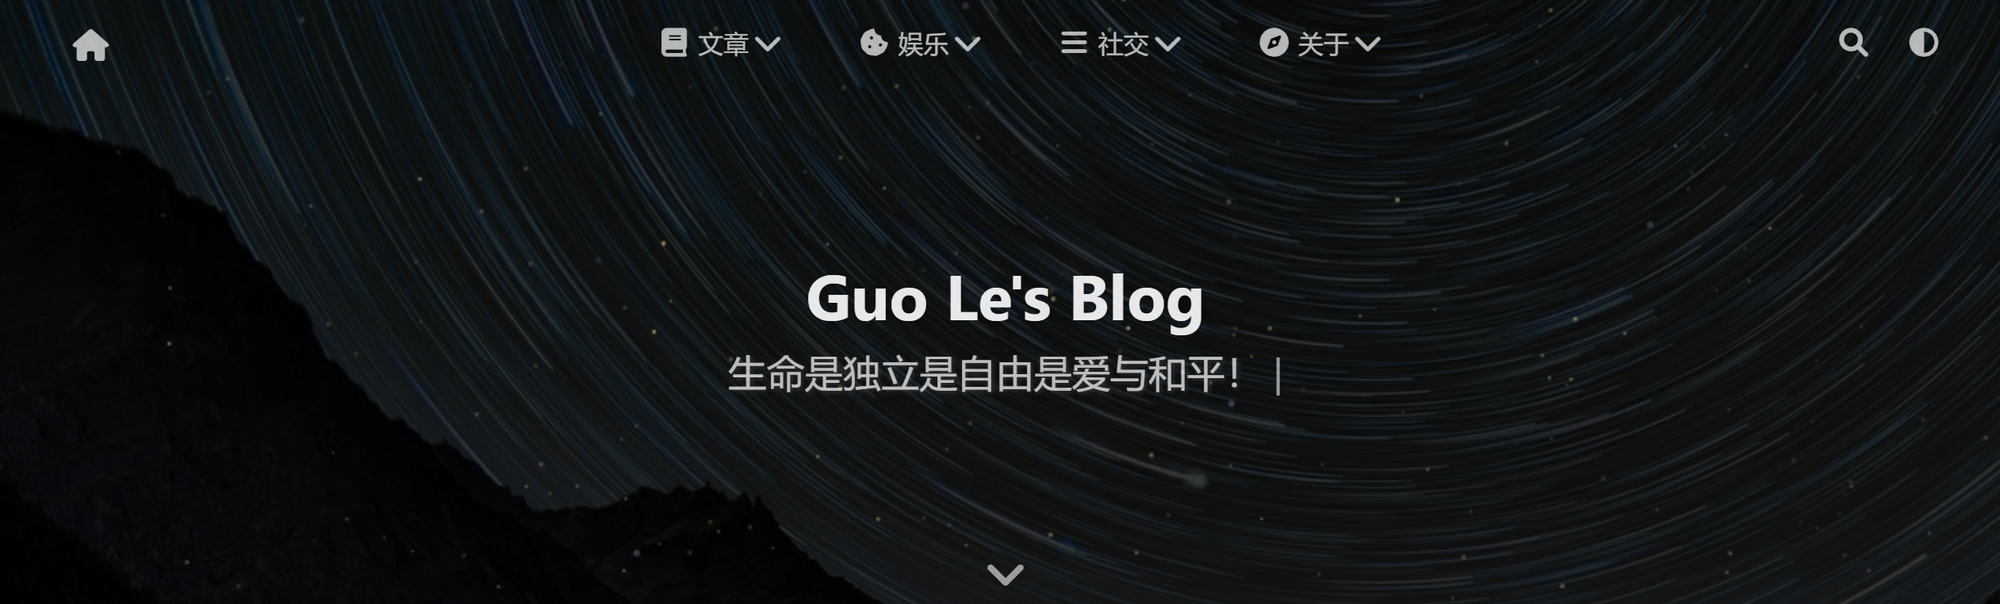 Guo Le's Blog